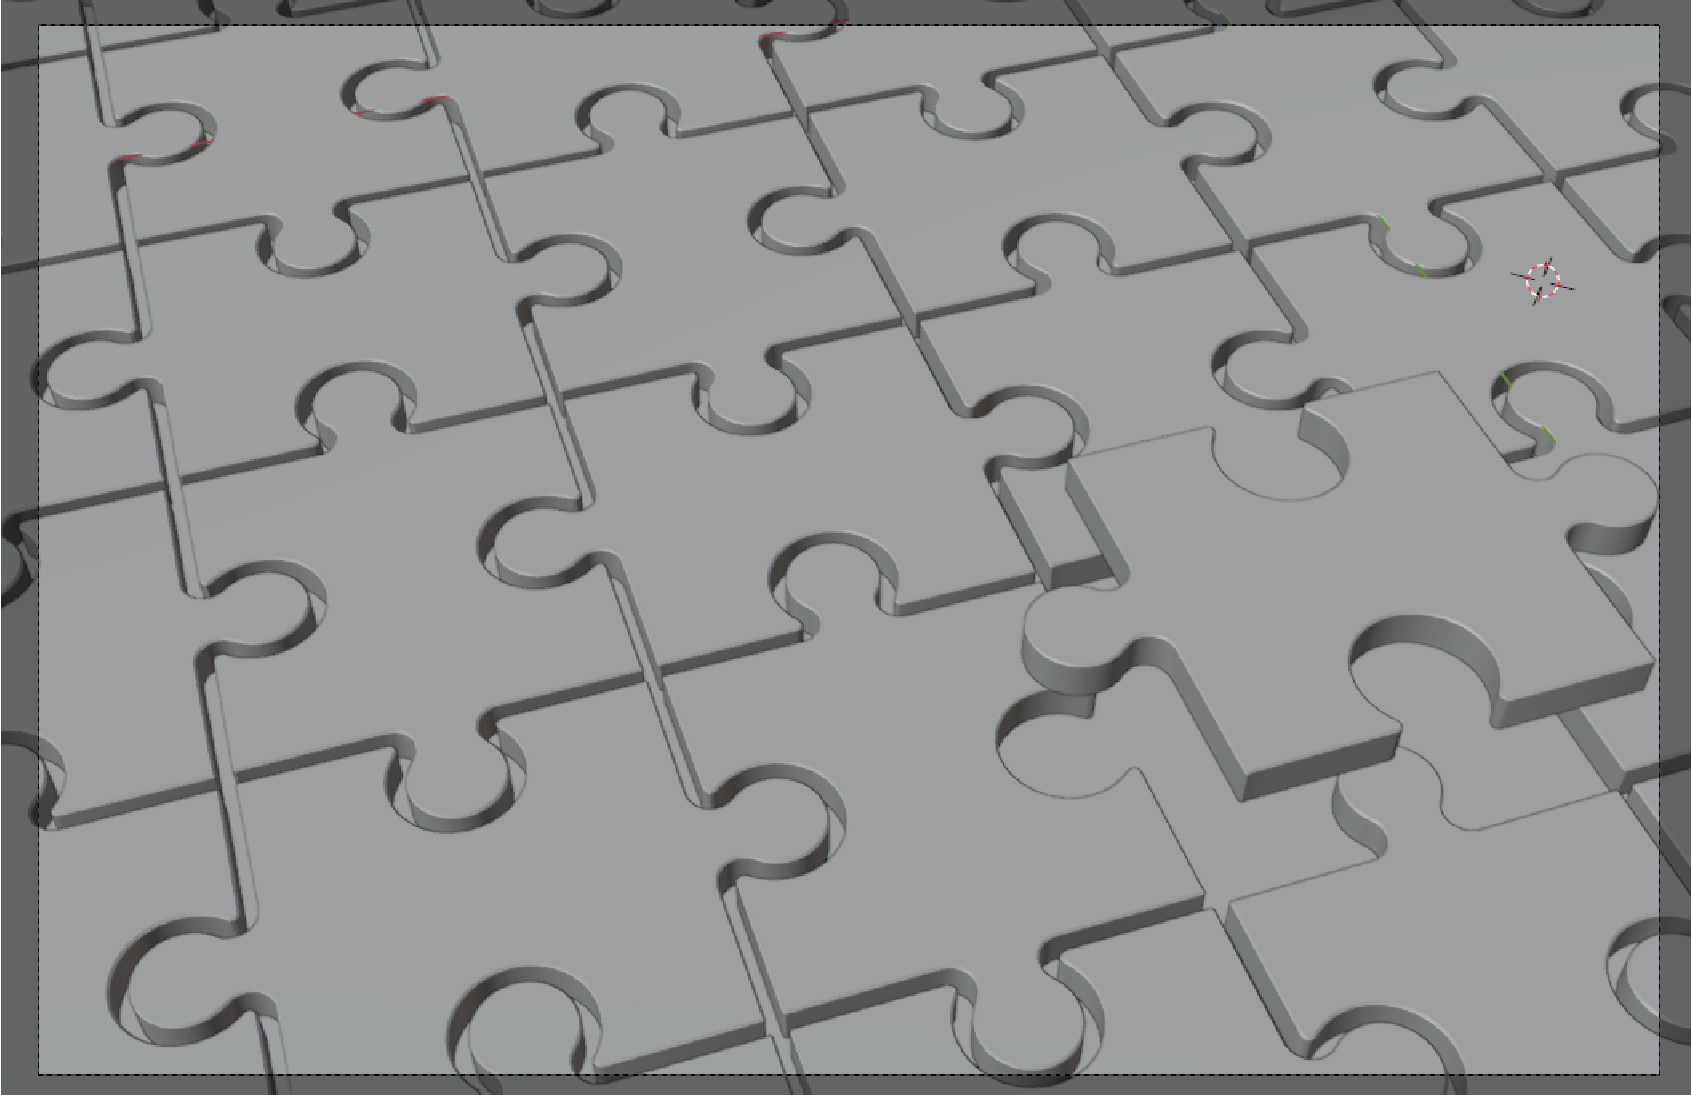 Blender 3D Viewport view of puzzle piece environment